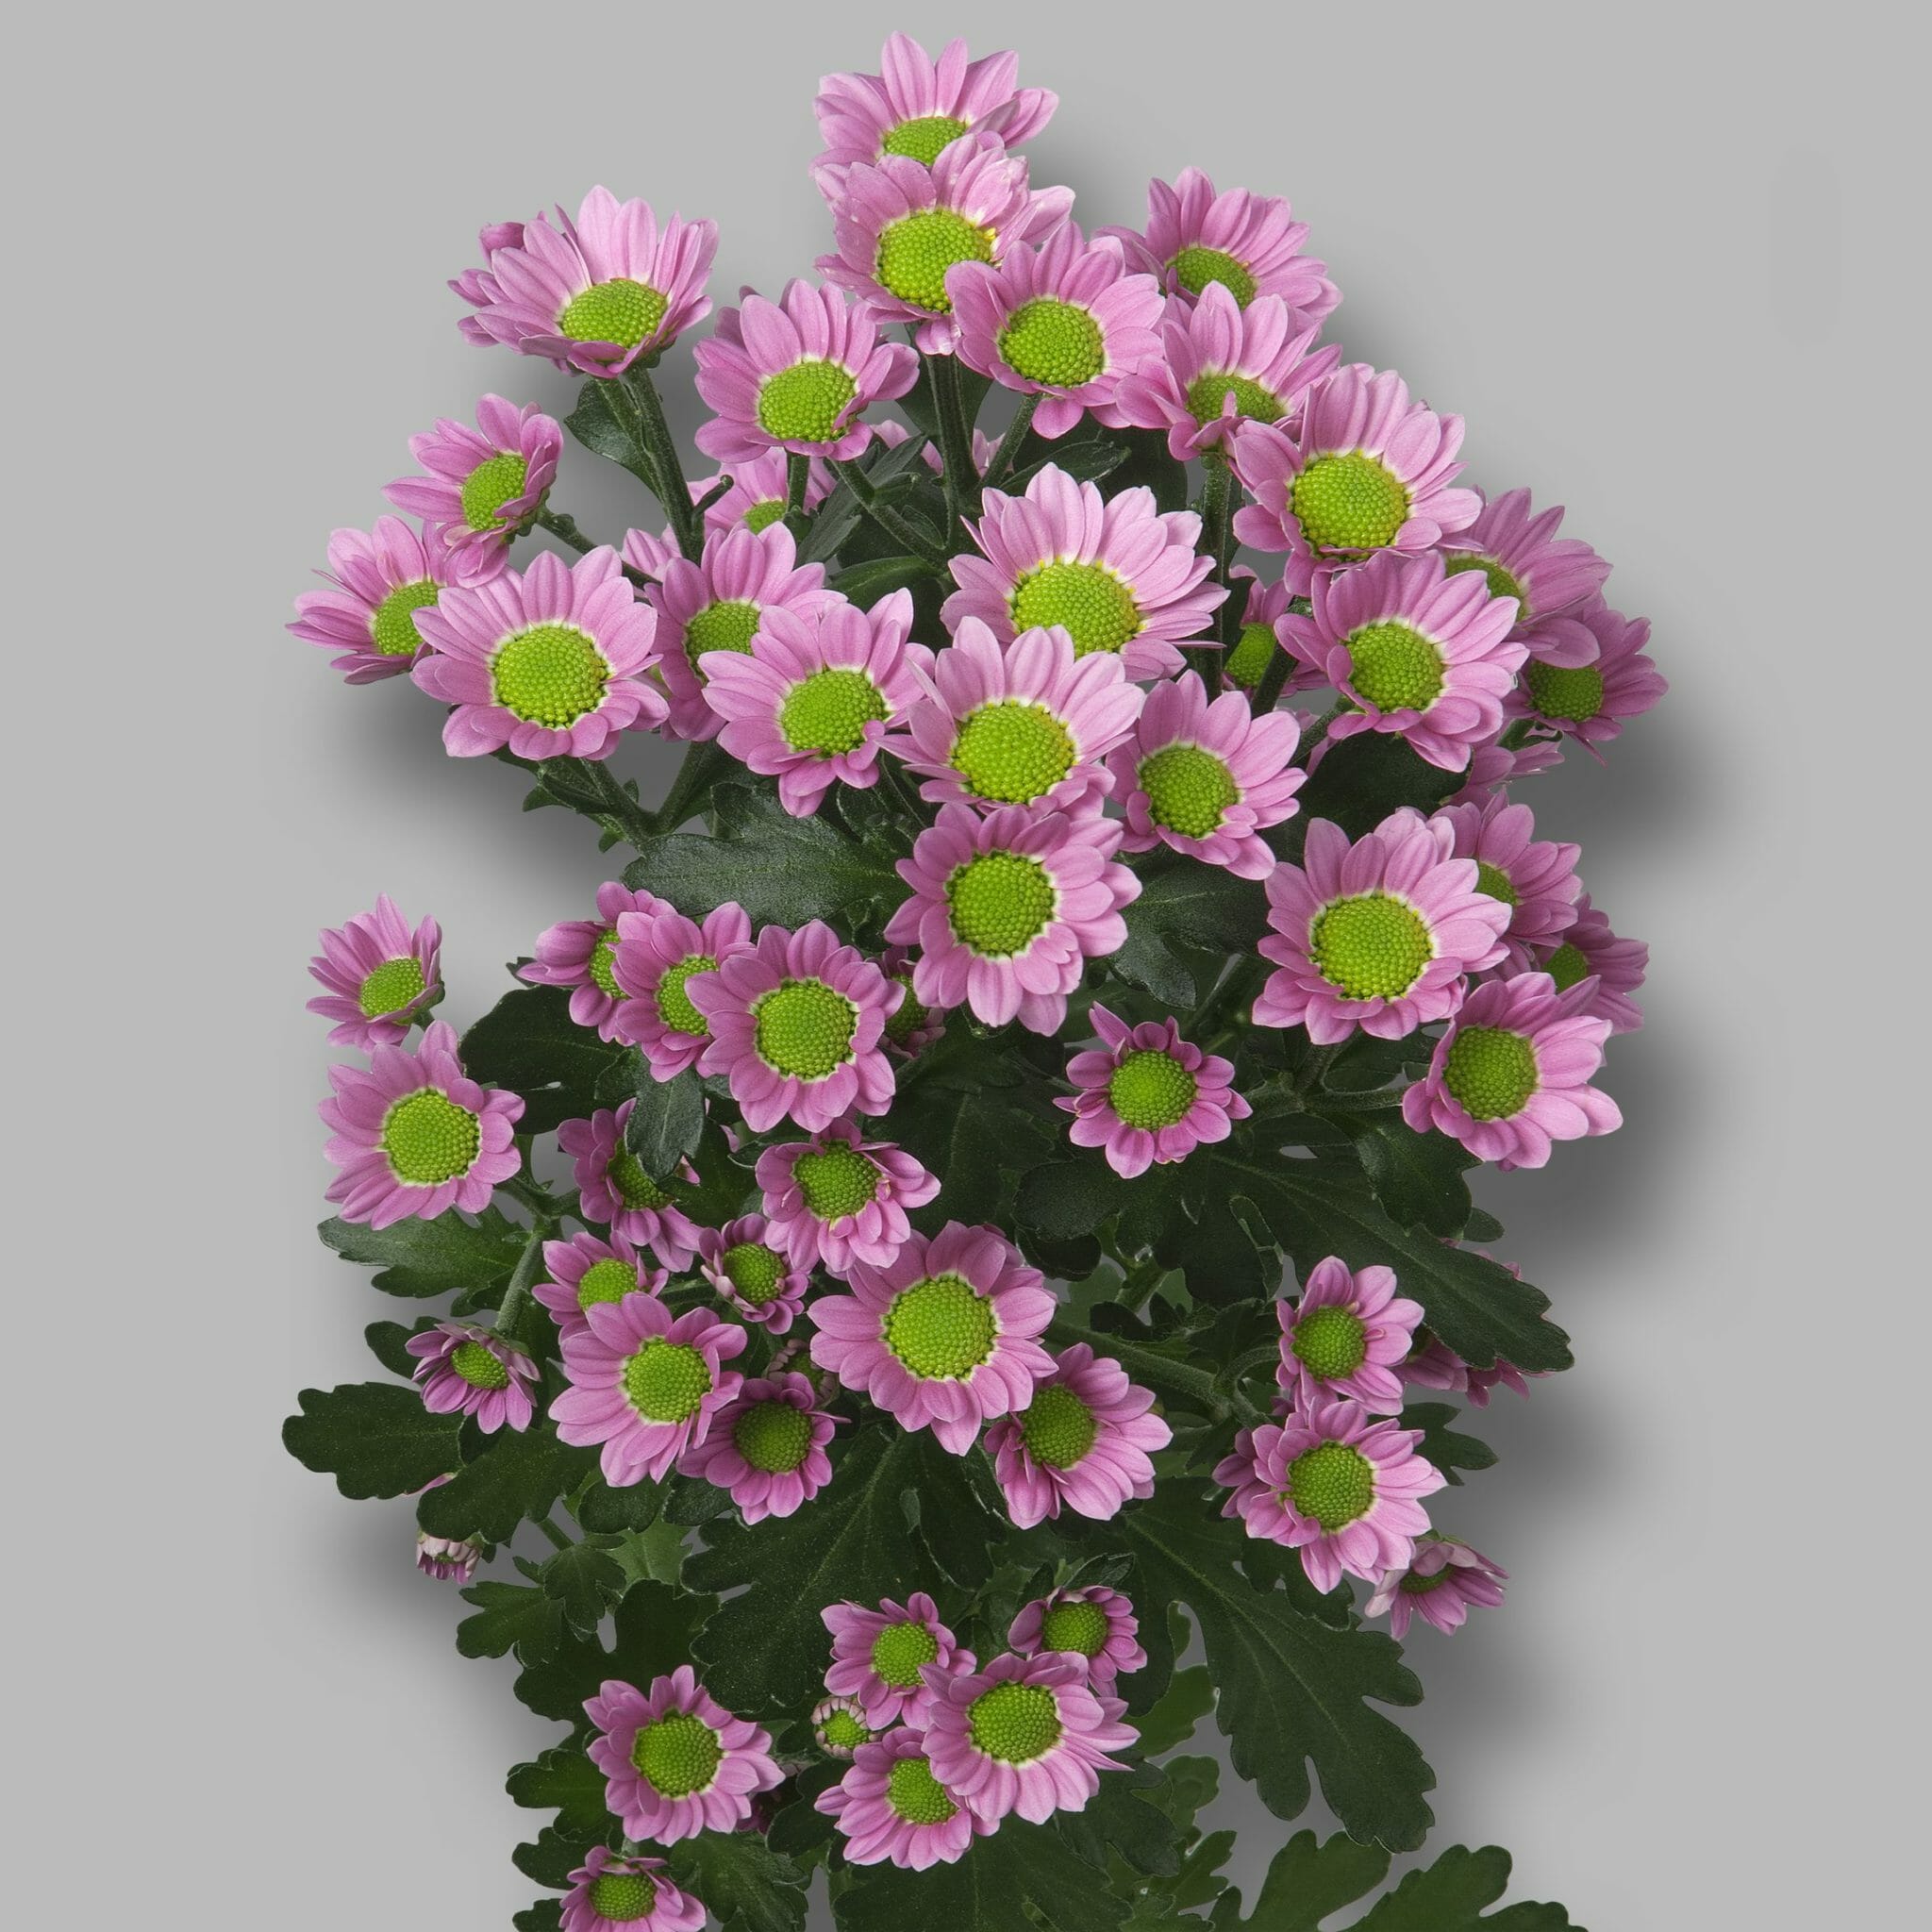 хризантема лолипоп фото